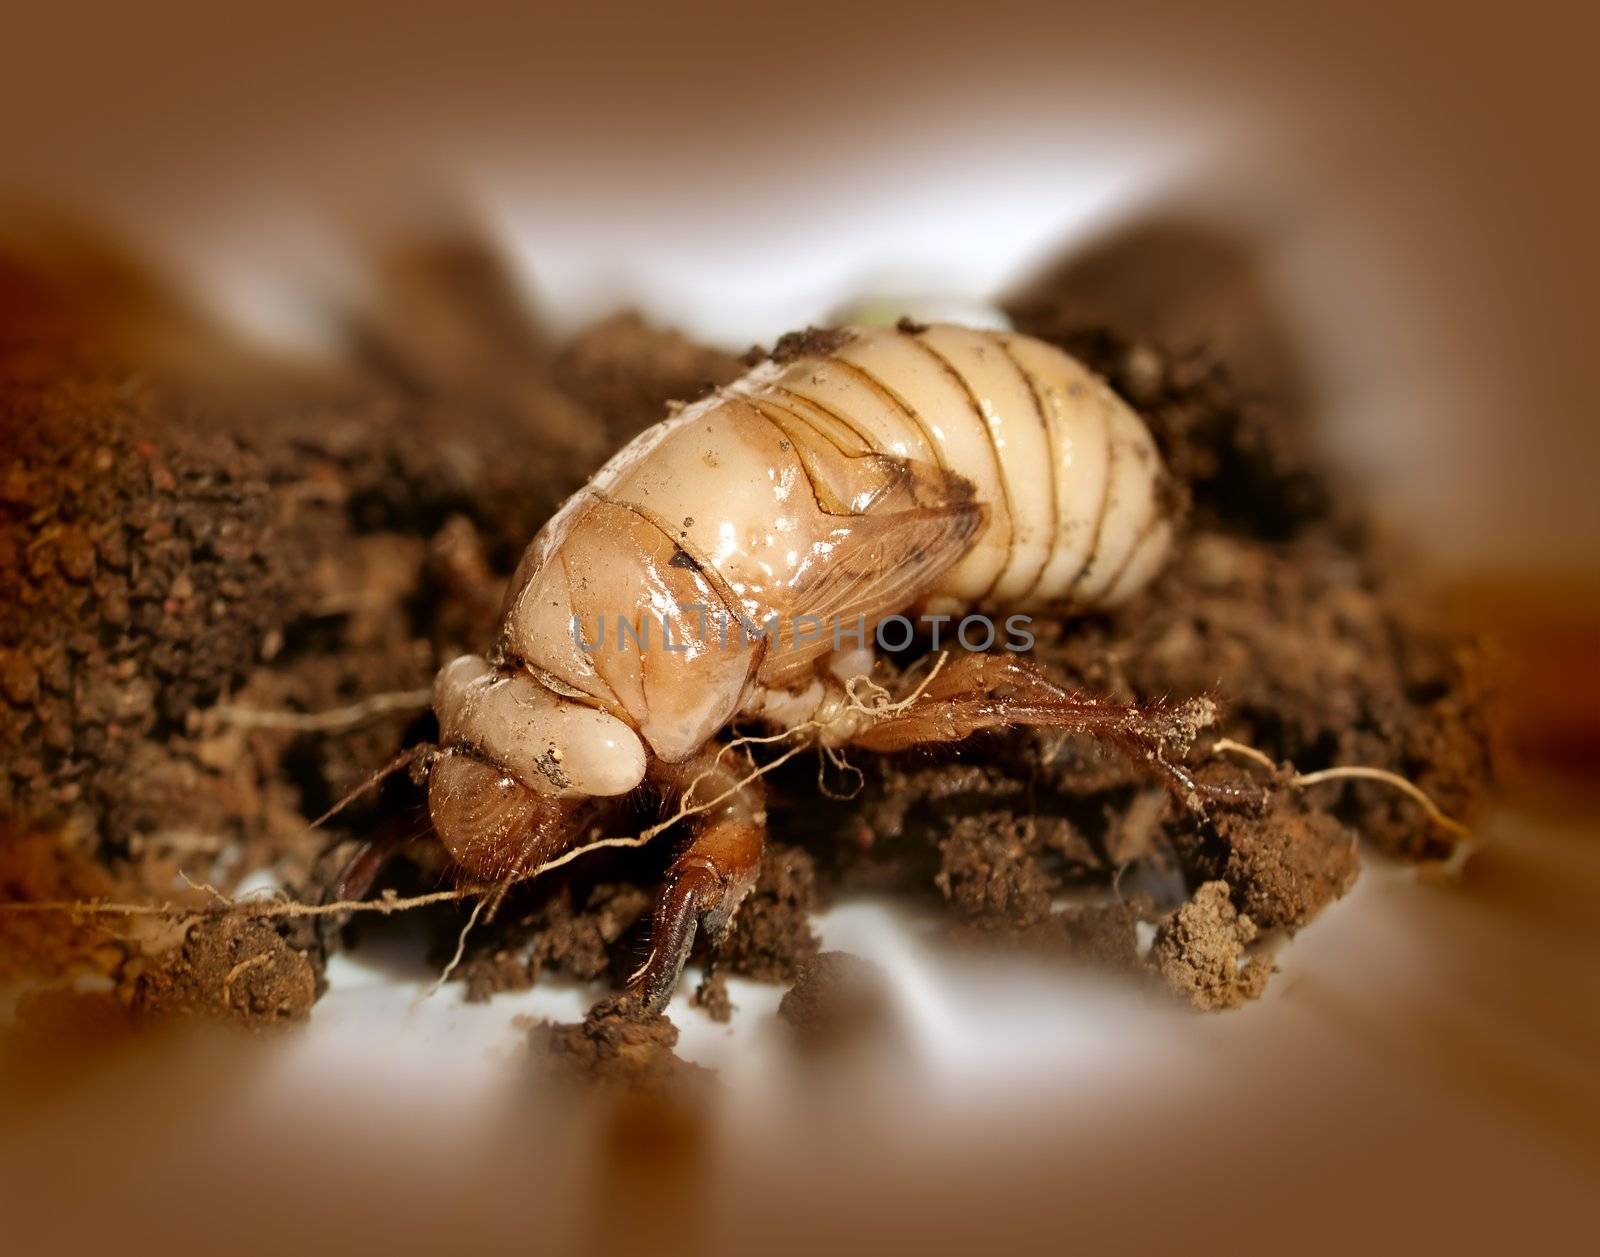 ustralian Christmas beetle larvae  Scarabaeidae Anoplognathus metamorphisis